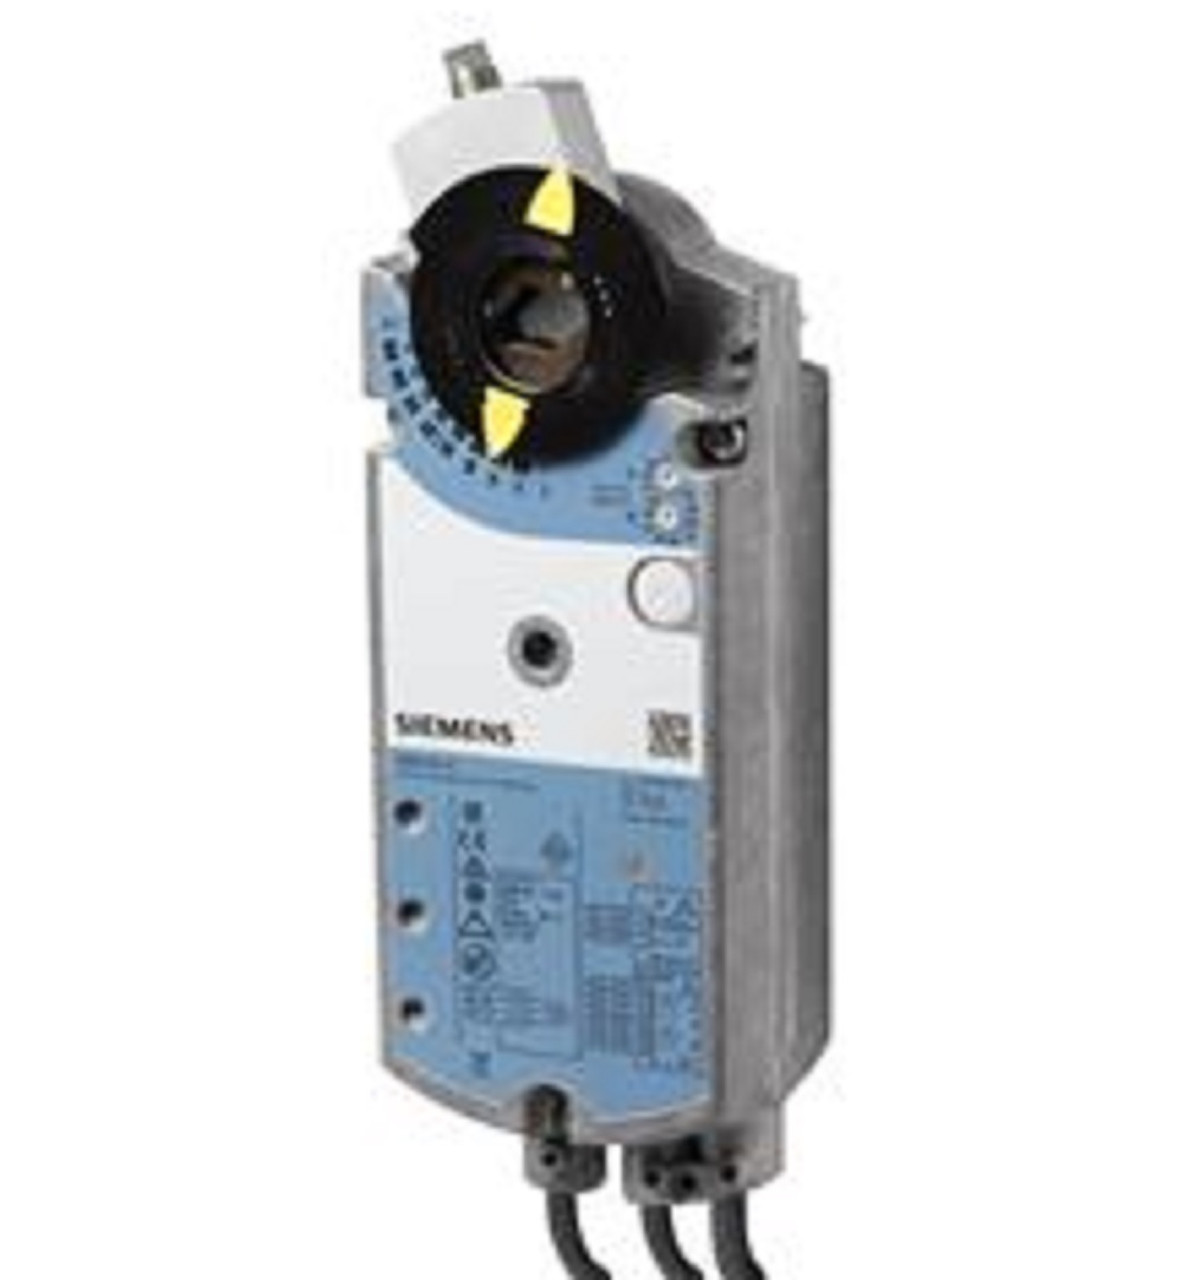 Siemens GBB331.1E Rotary Air Damper Actuator, AC 230 V, 3-Position, 25 Nm, 150 s [New]